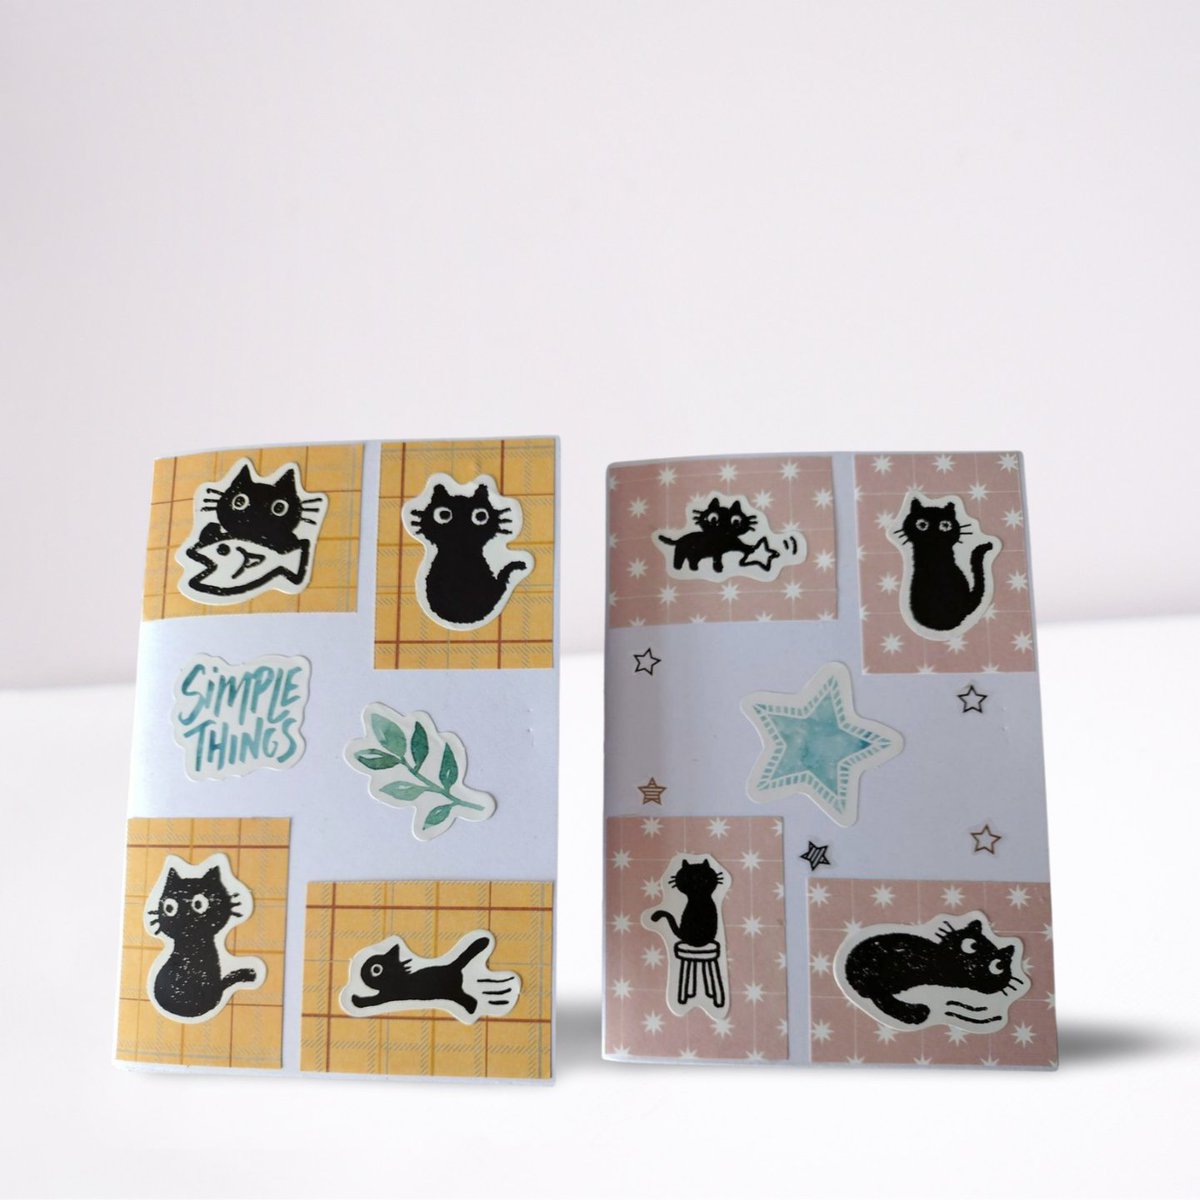 SOLD - set of two black cat notebooks
#handmade #notebooklove #handmadewithlove